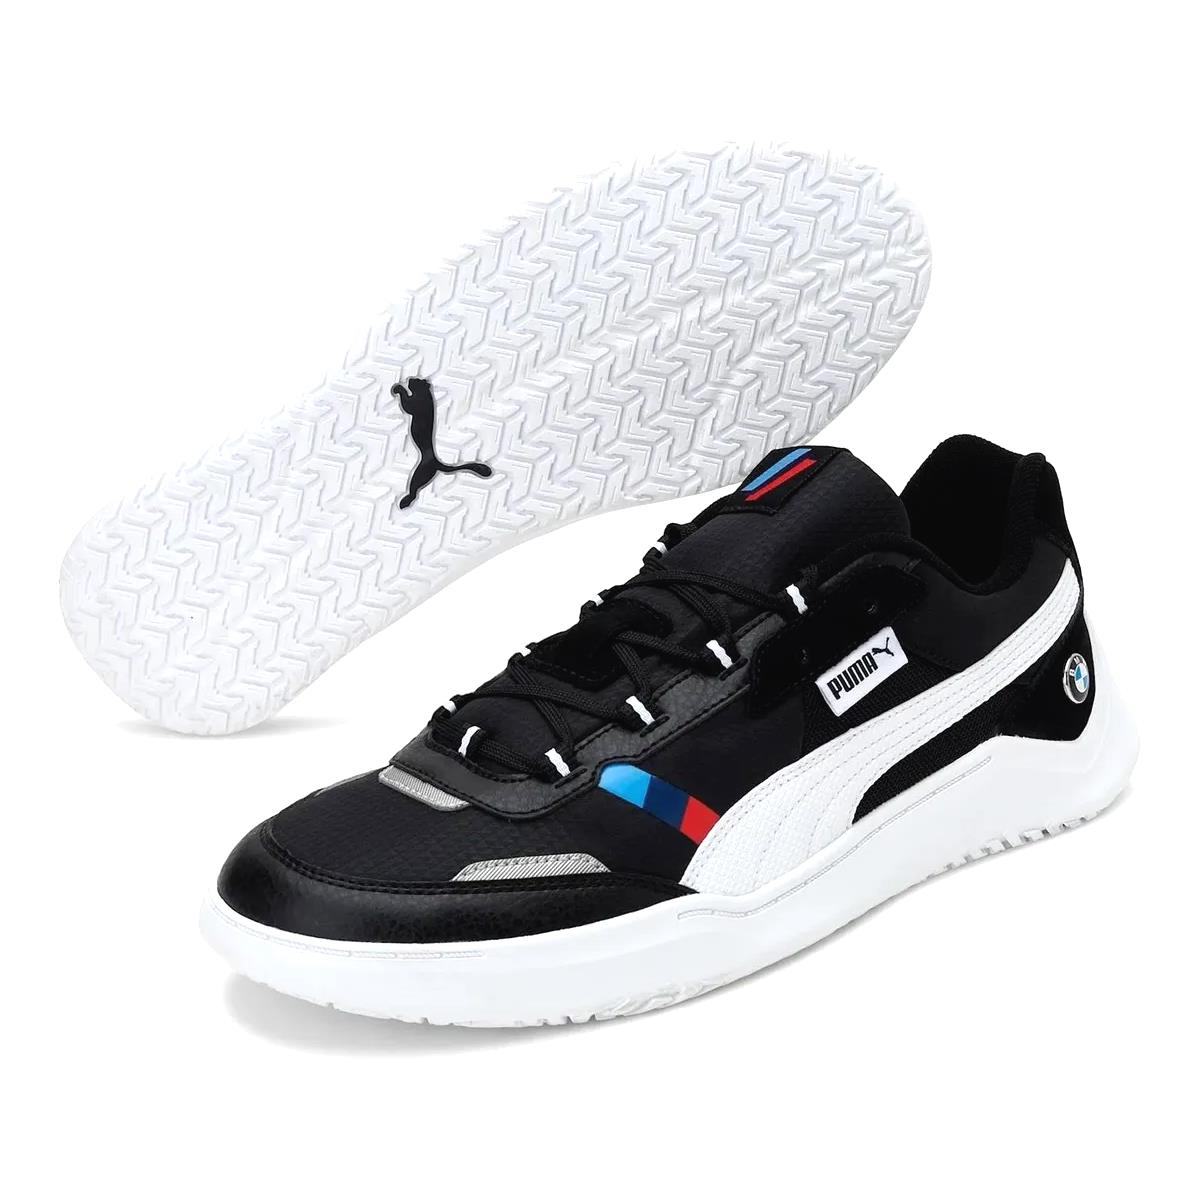 Mens Puma Bmw Mms M DC Future Black Athletic Motorsport Fashion Sneakers Shoes